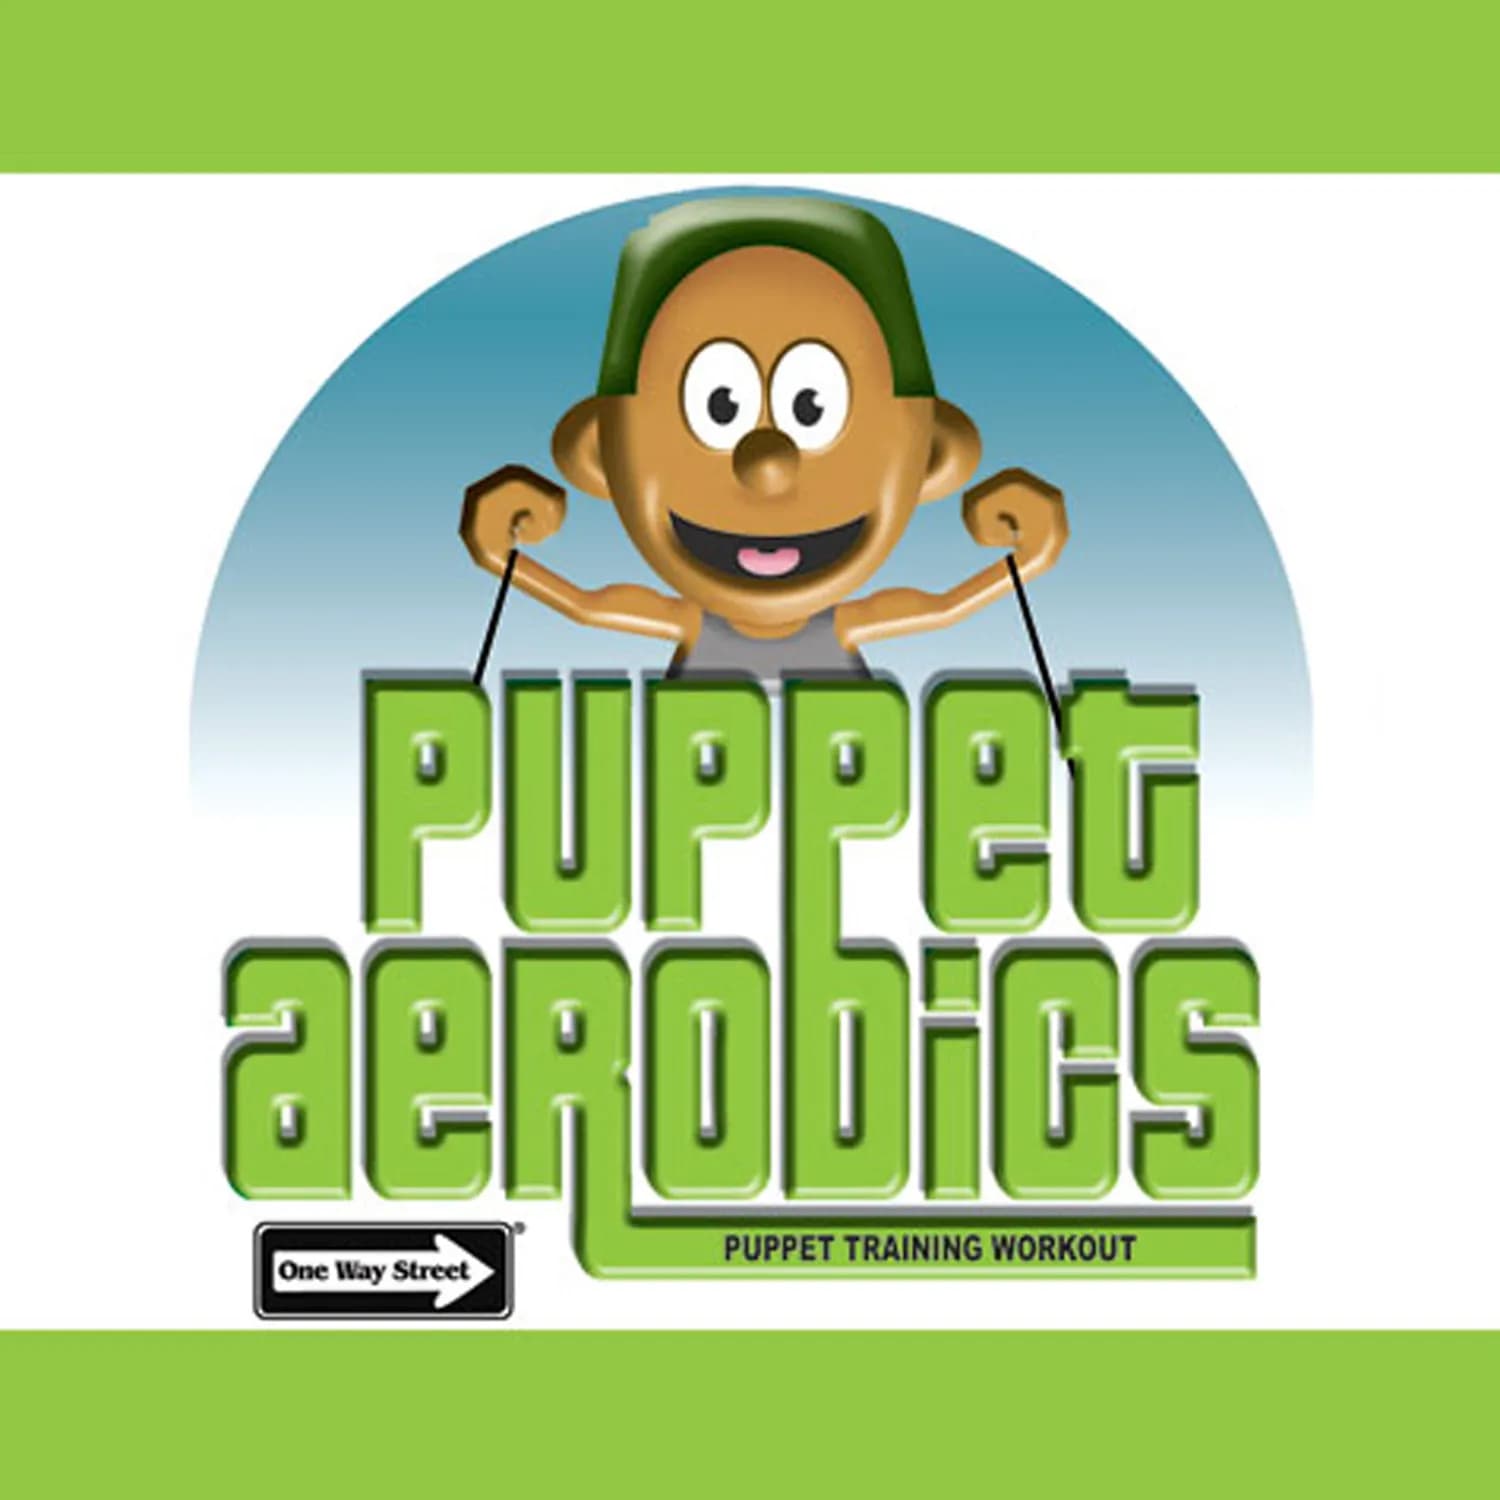 Puppet Aerobics CD